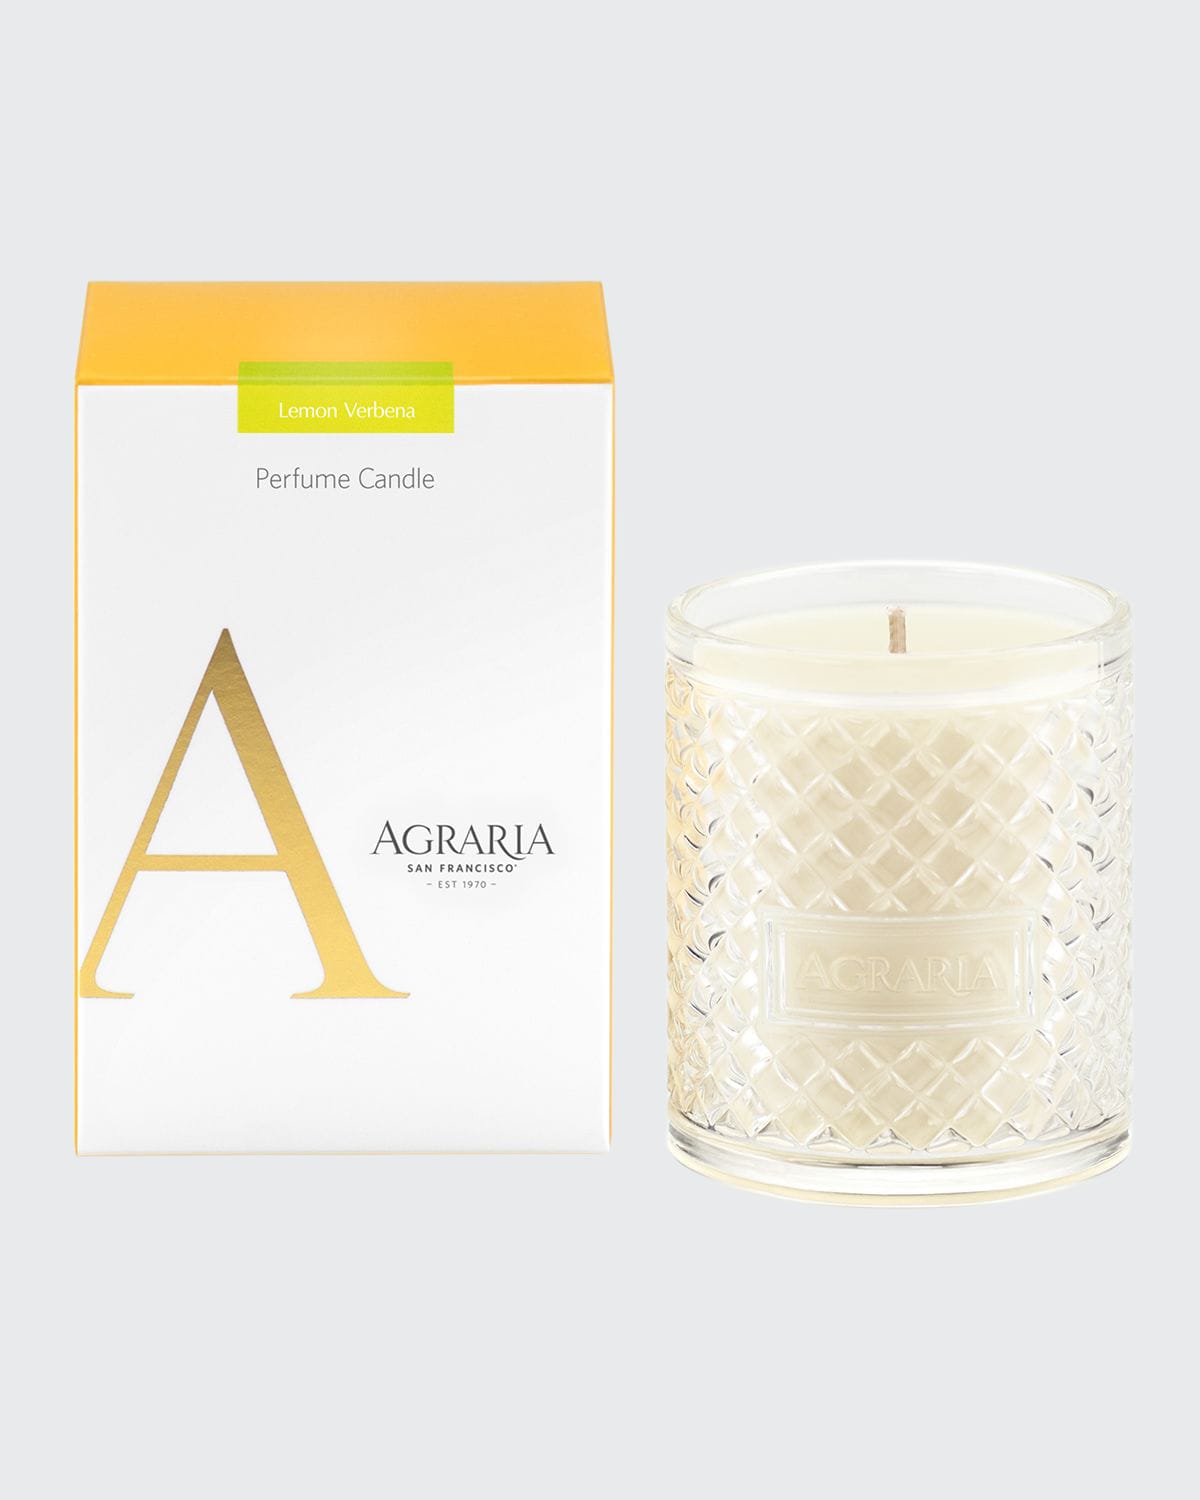 Agraria 7 oz. Lemon Verbana Perfume Candle